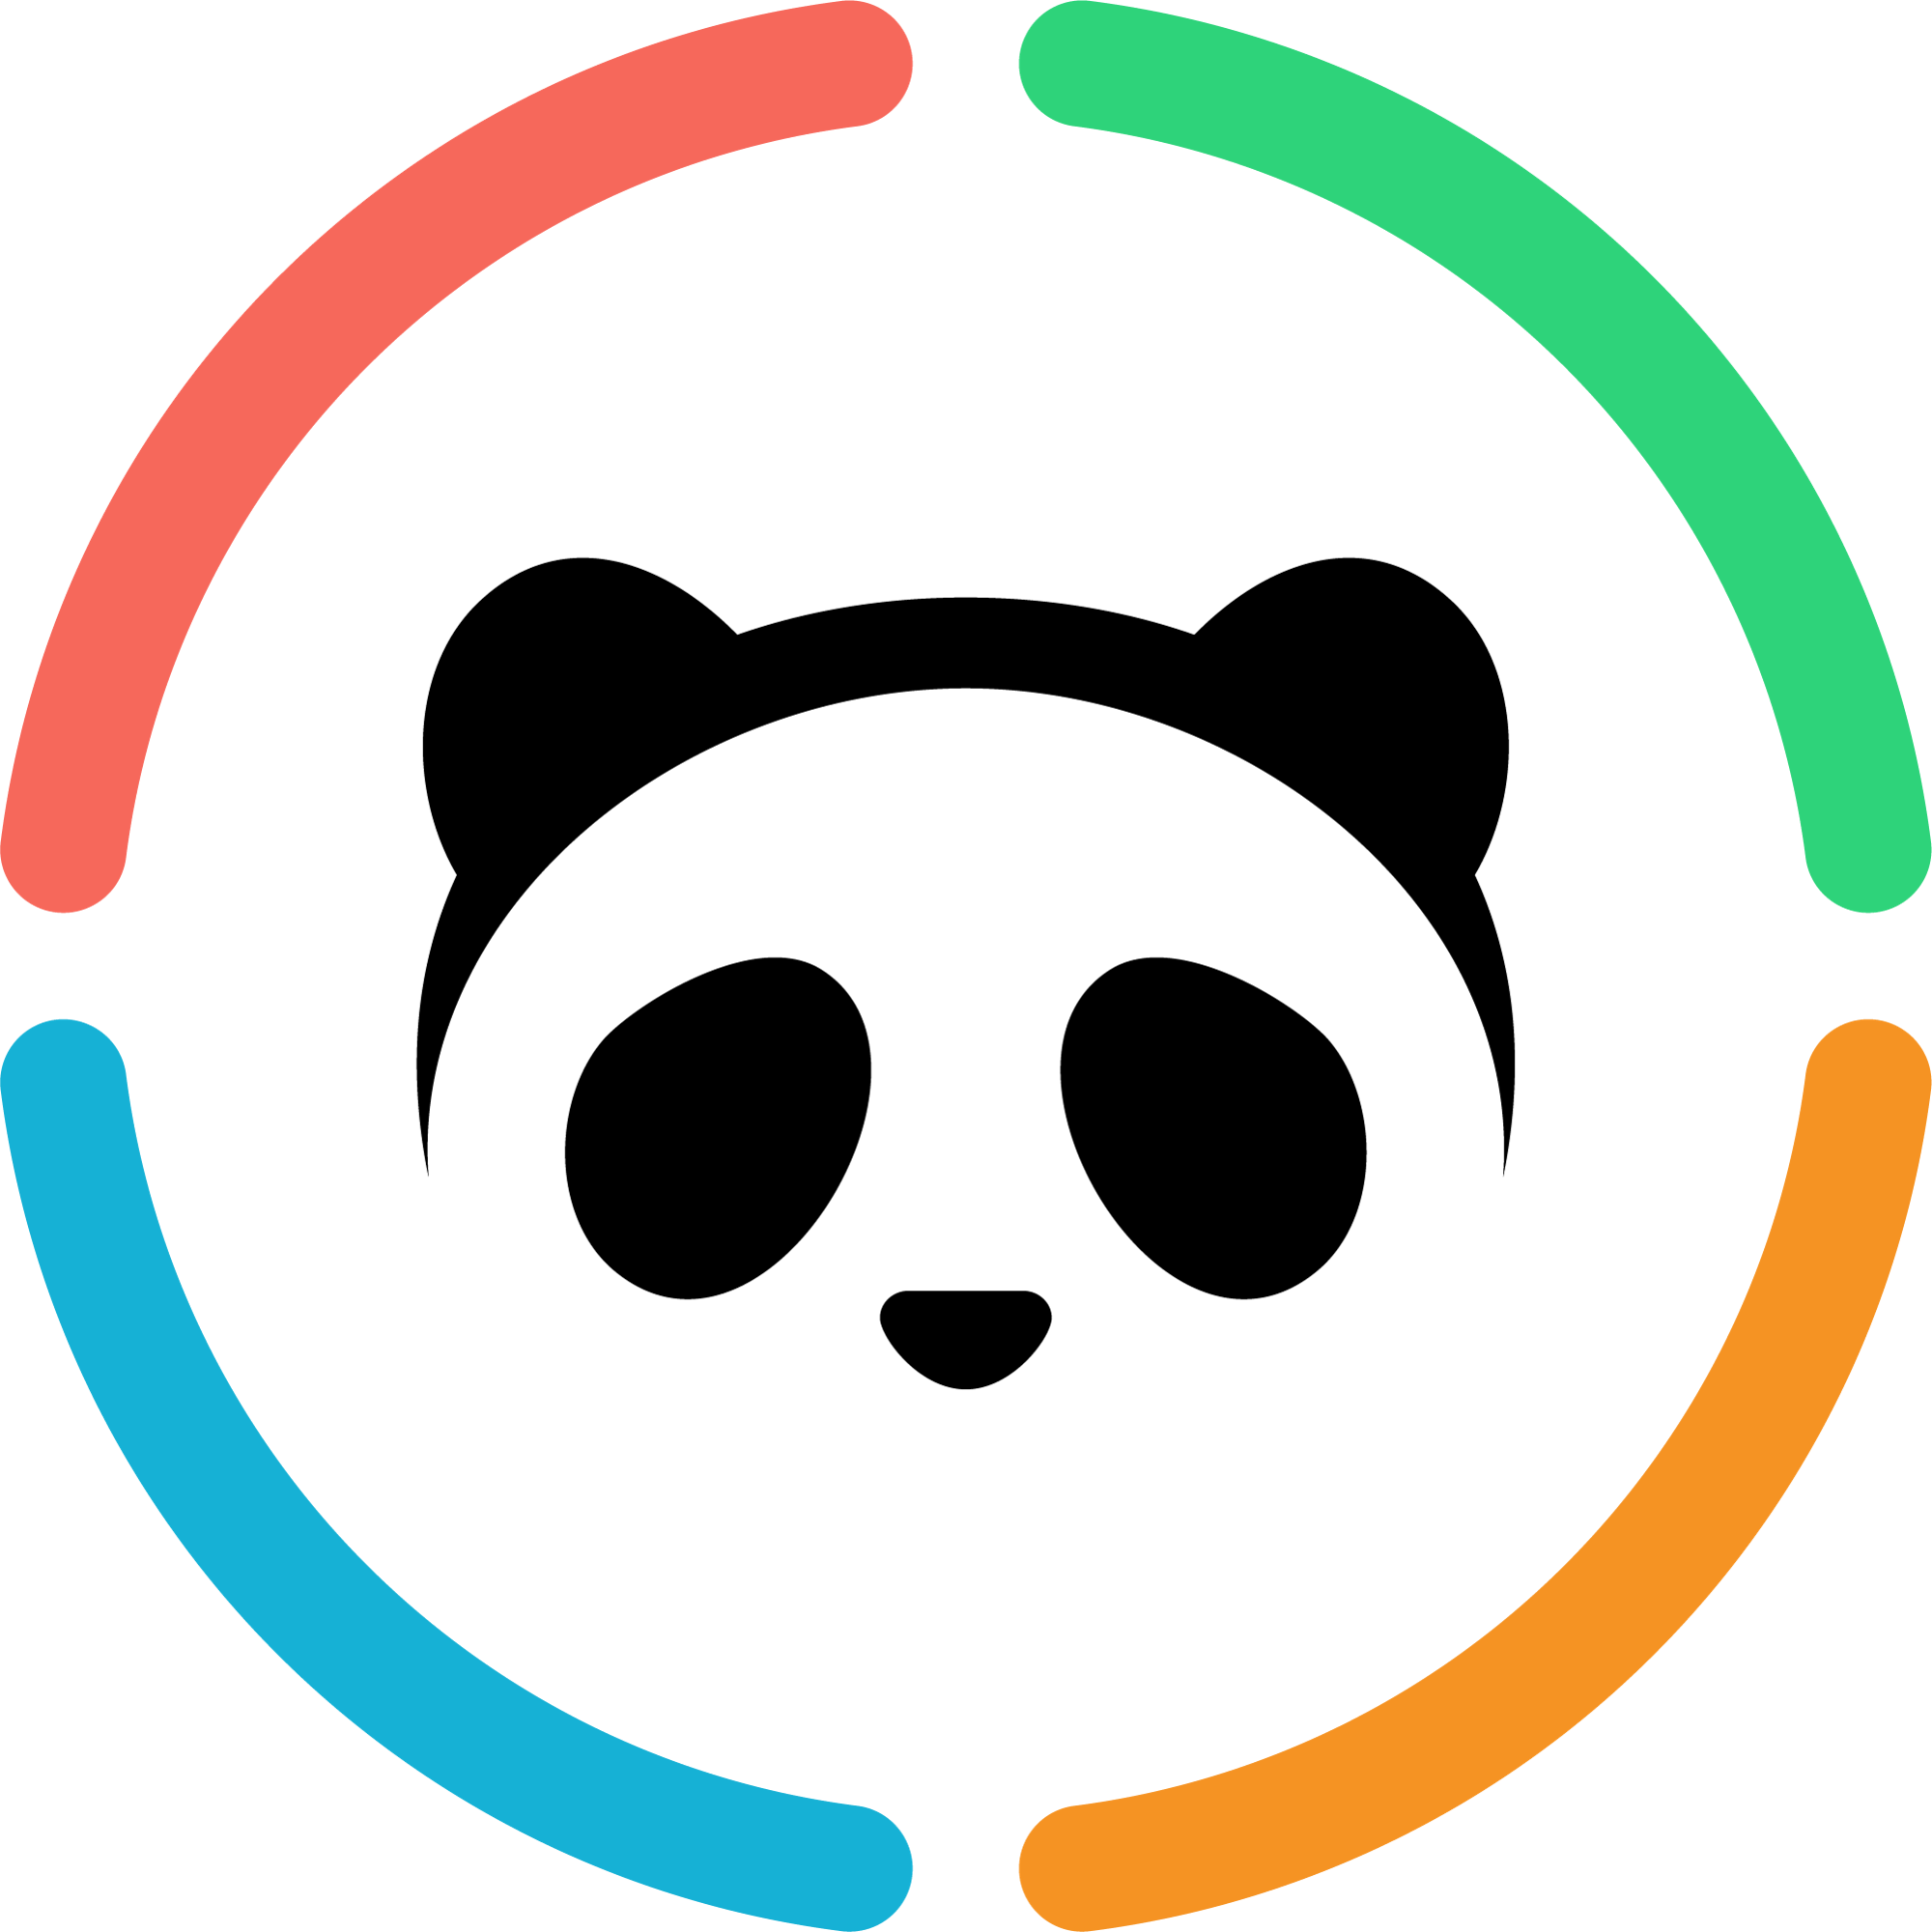 Dispute Panda Community